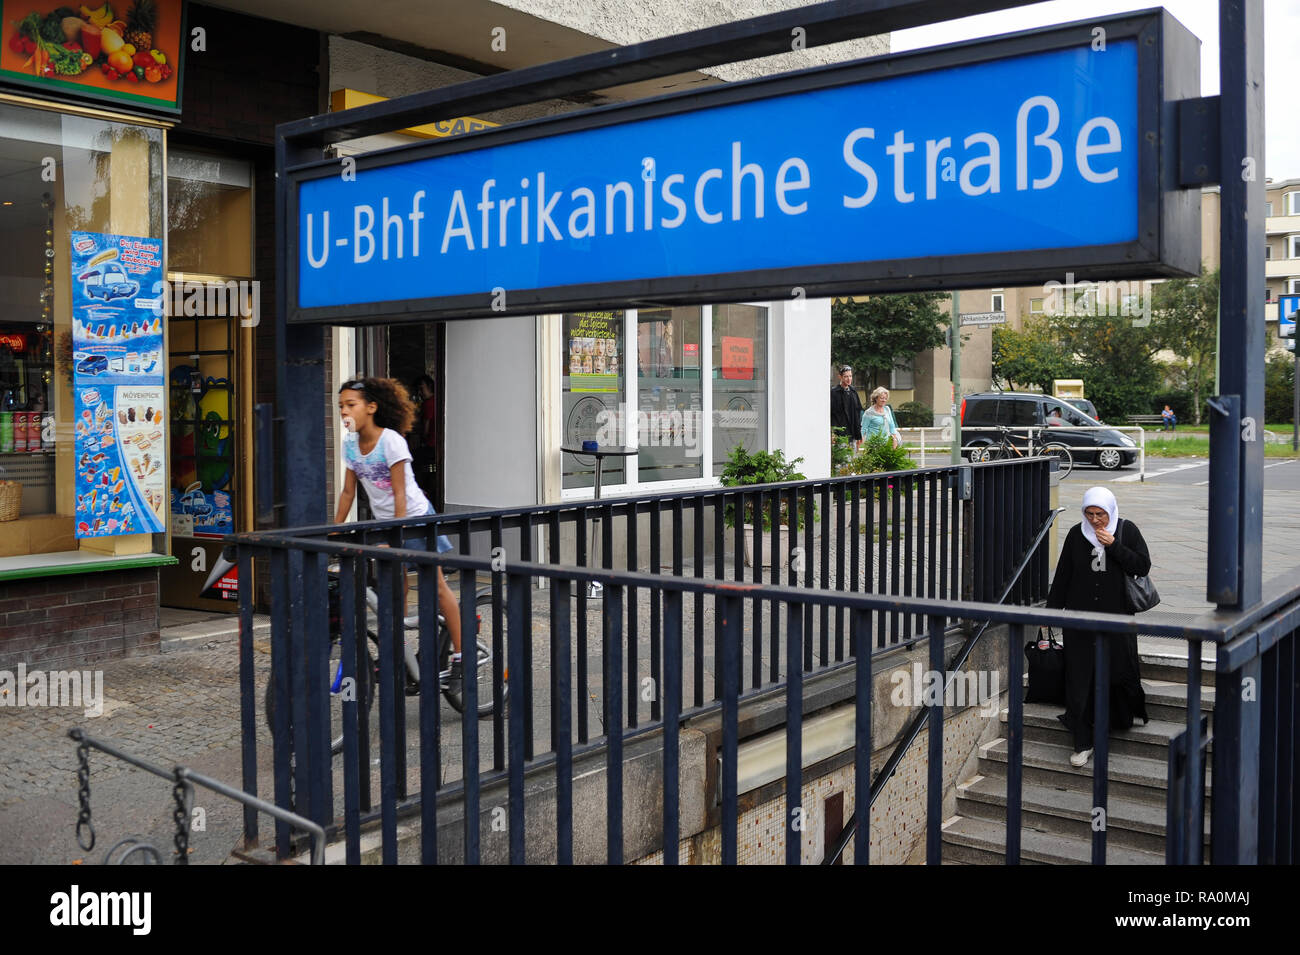 03.10.2011, Berlin, Deutschland, Europa - Zugang zum U-Bahnhof Afrikanische Strasse in Berlin-Wedding. 0SL111003D007CARO.JPG [MODEL RELEASE: NO, PROPE Stock Photo